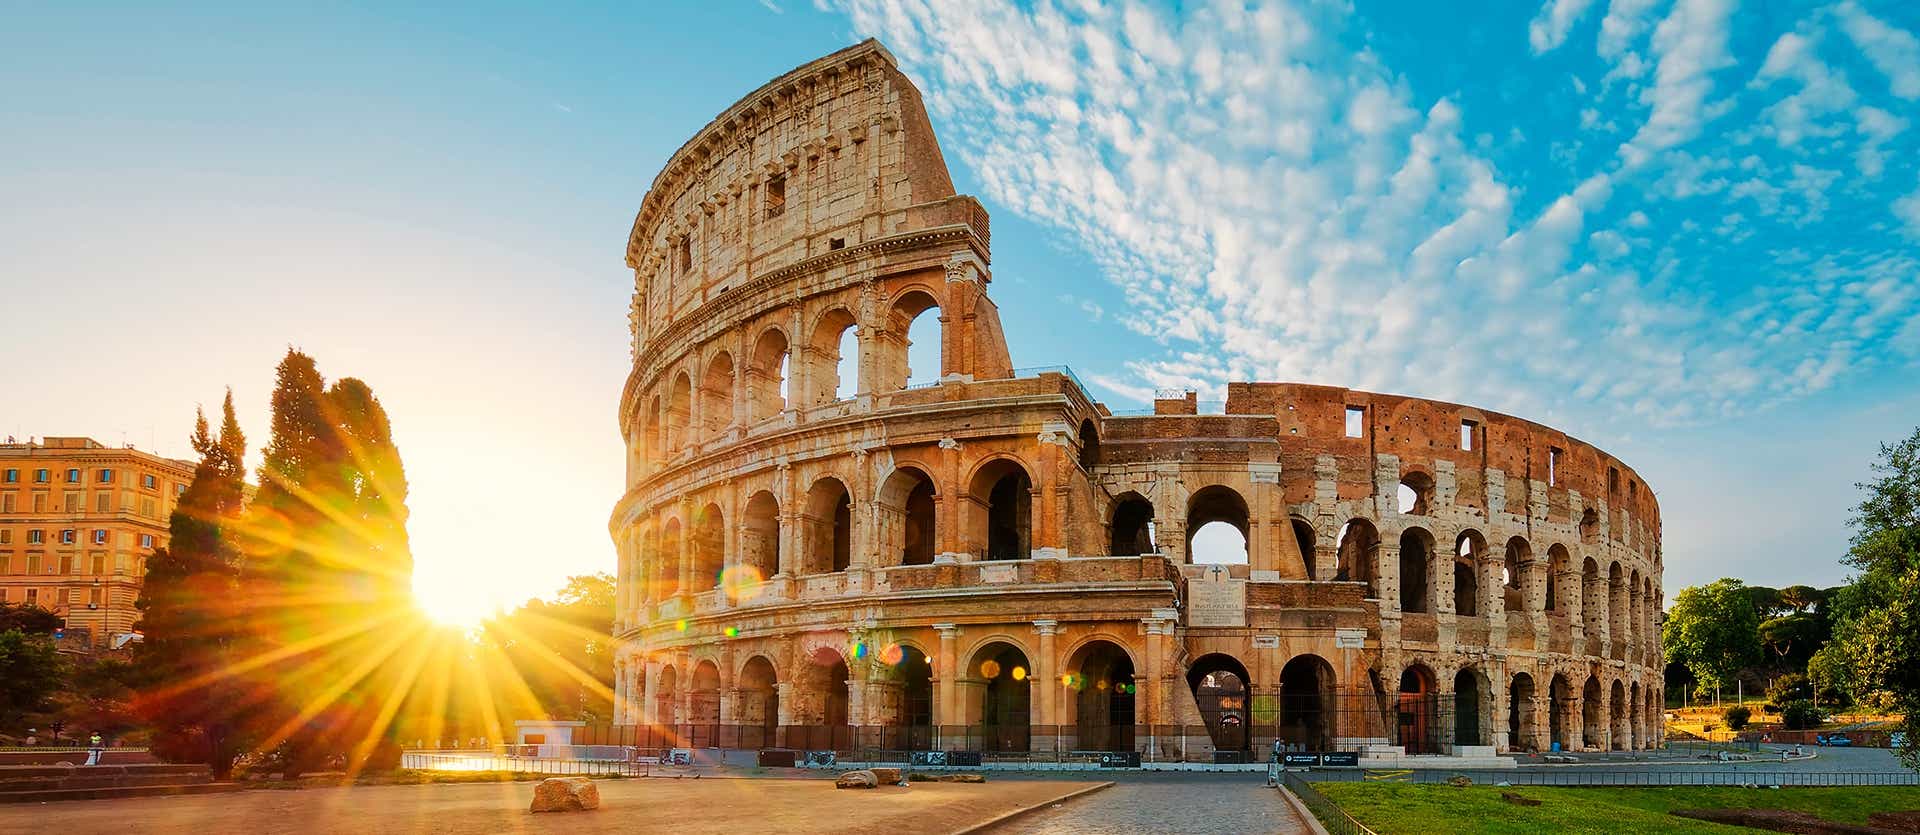 The Colosseum <span class="iconos separador"></span> Rome